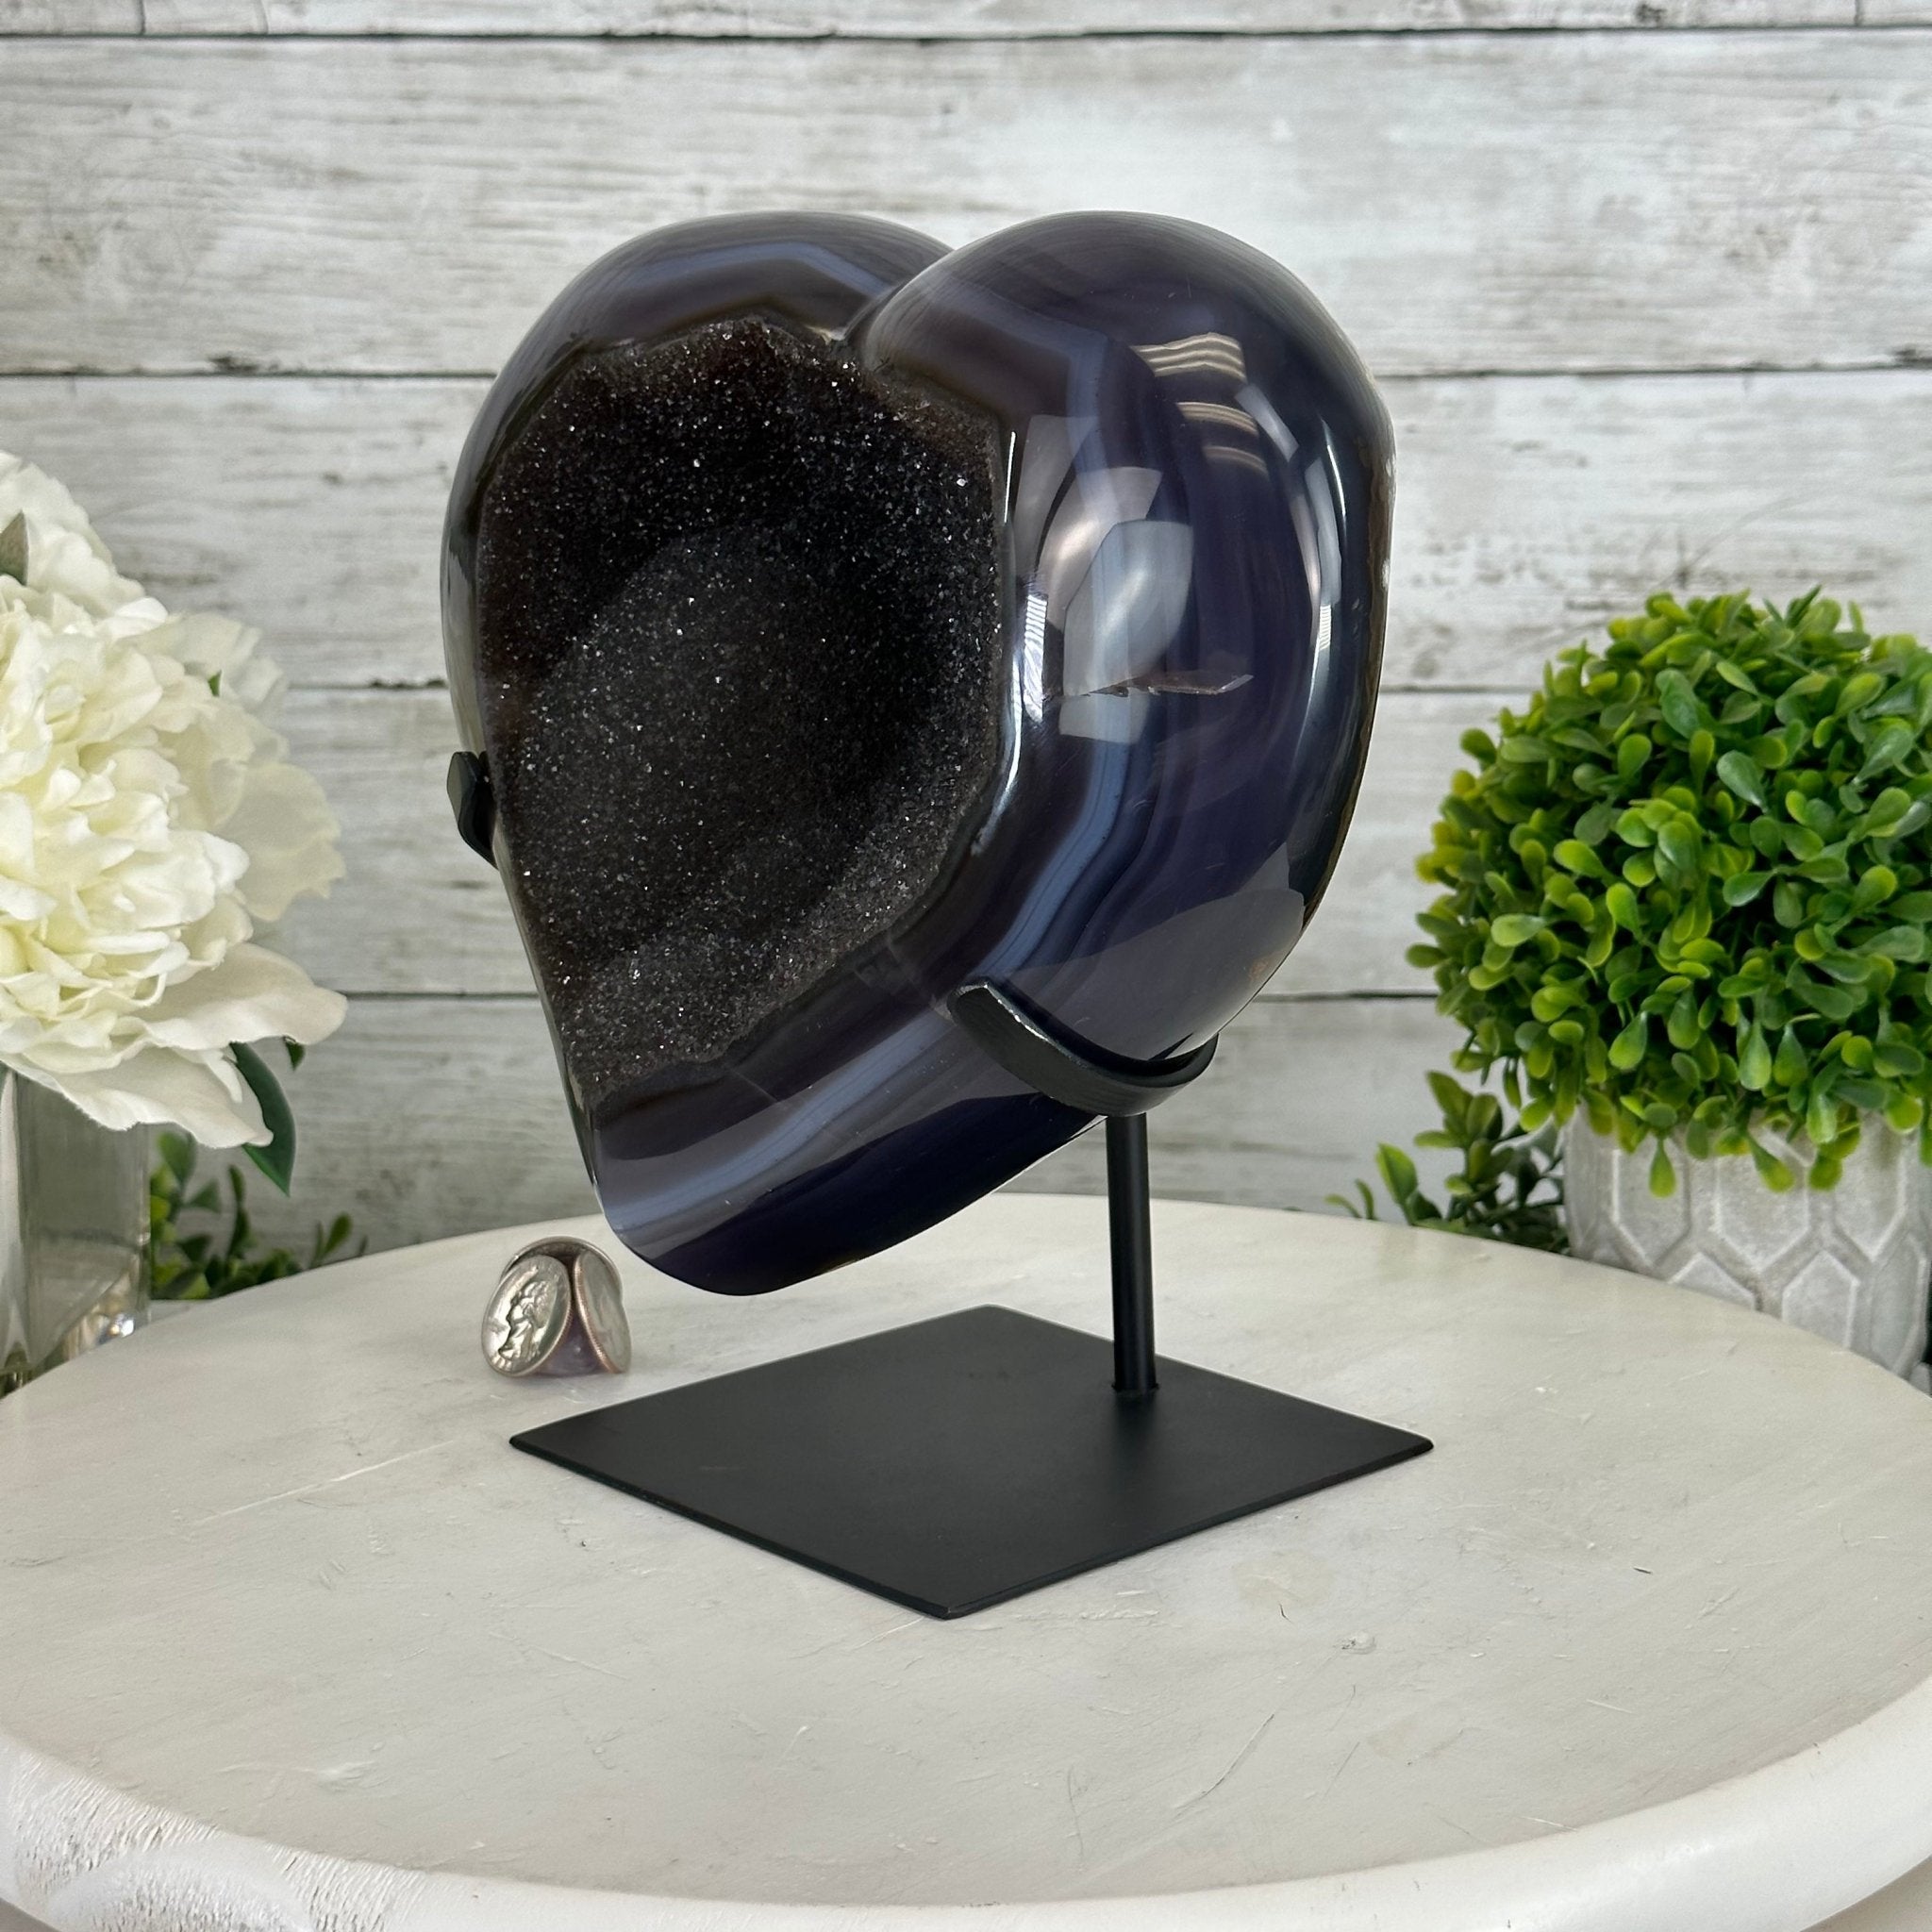 Polished Agate Heart Geode on a Metal Stand, 9.8 lbs & 8.7" Tall, Model #5468-0082 by Brazil Gems - Brazil GemsBrazil GemsPolished Agate Heart Geode on a Metal Stand, 9.8 lbs & 8.7" Tall, Model #5468-0082 by Brazil GemsHearts5468-0082